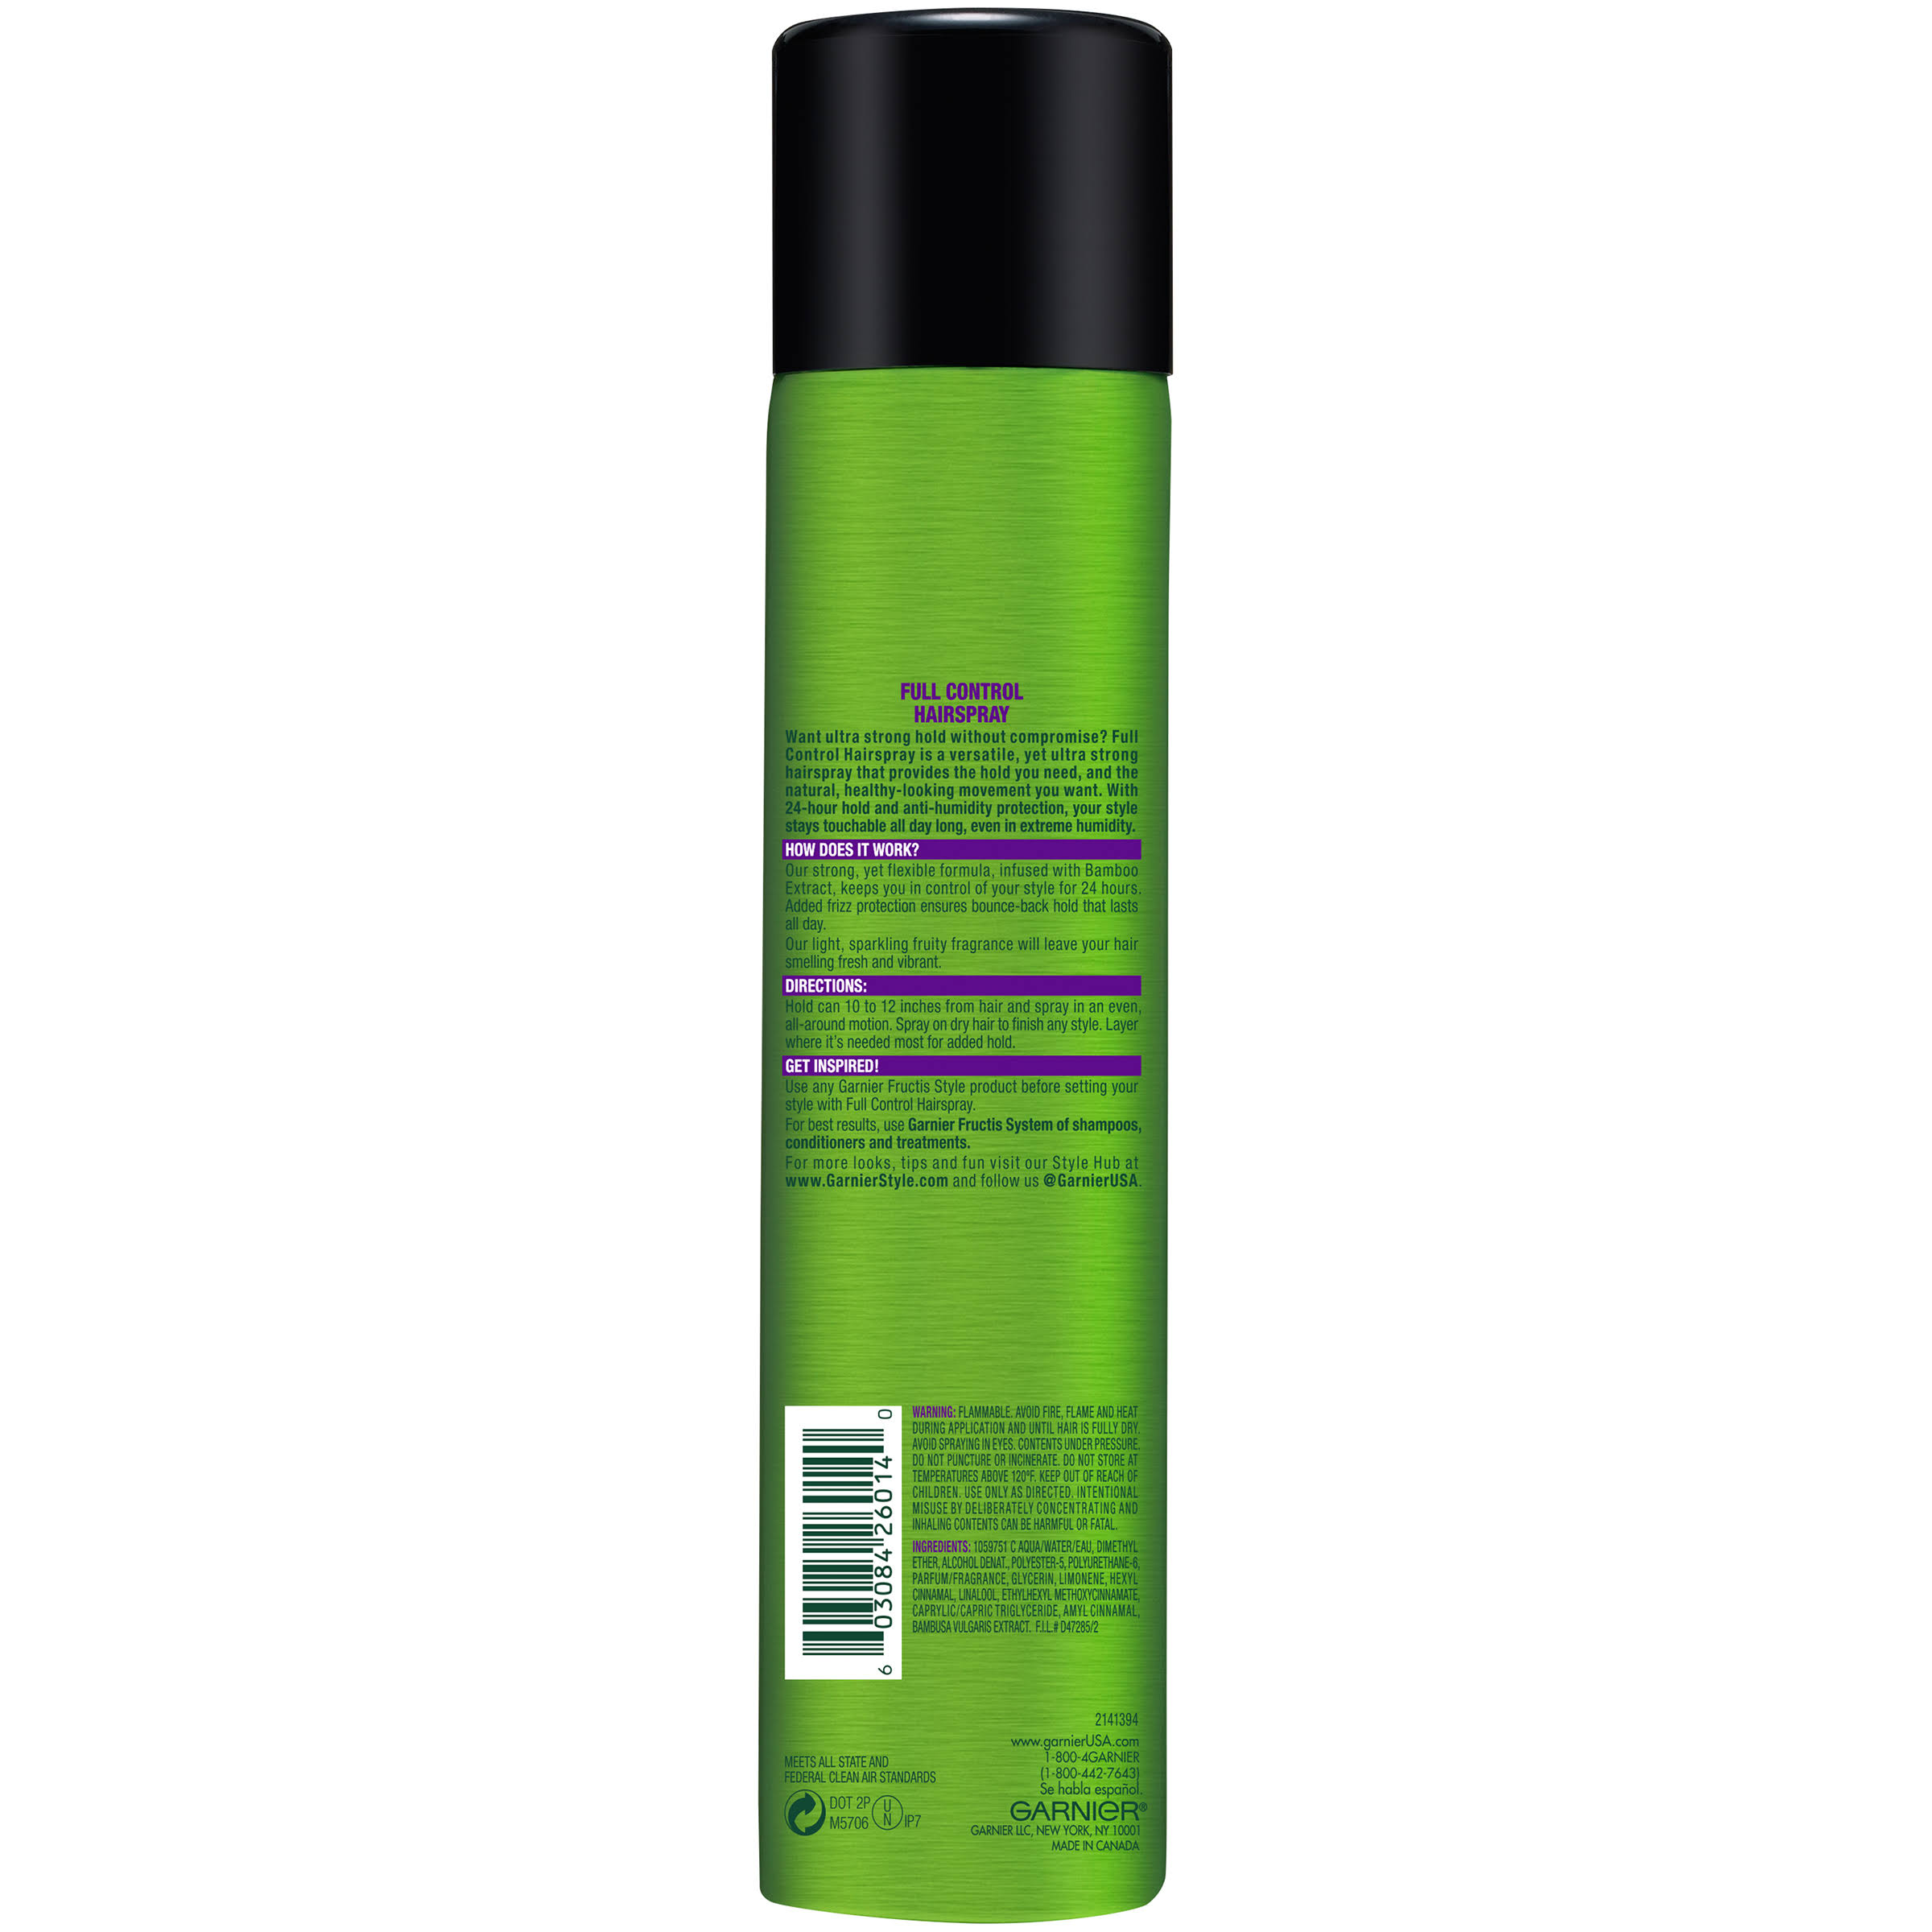 Garnier Style Full Control Hairspray Ultra Strong Hold - 8.25oz